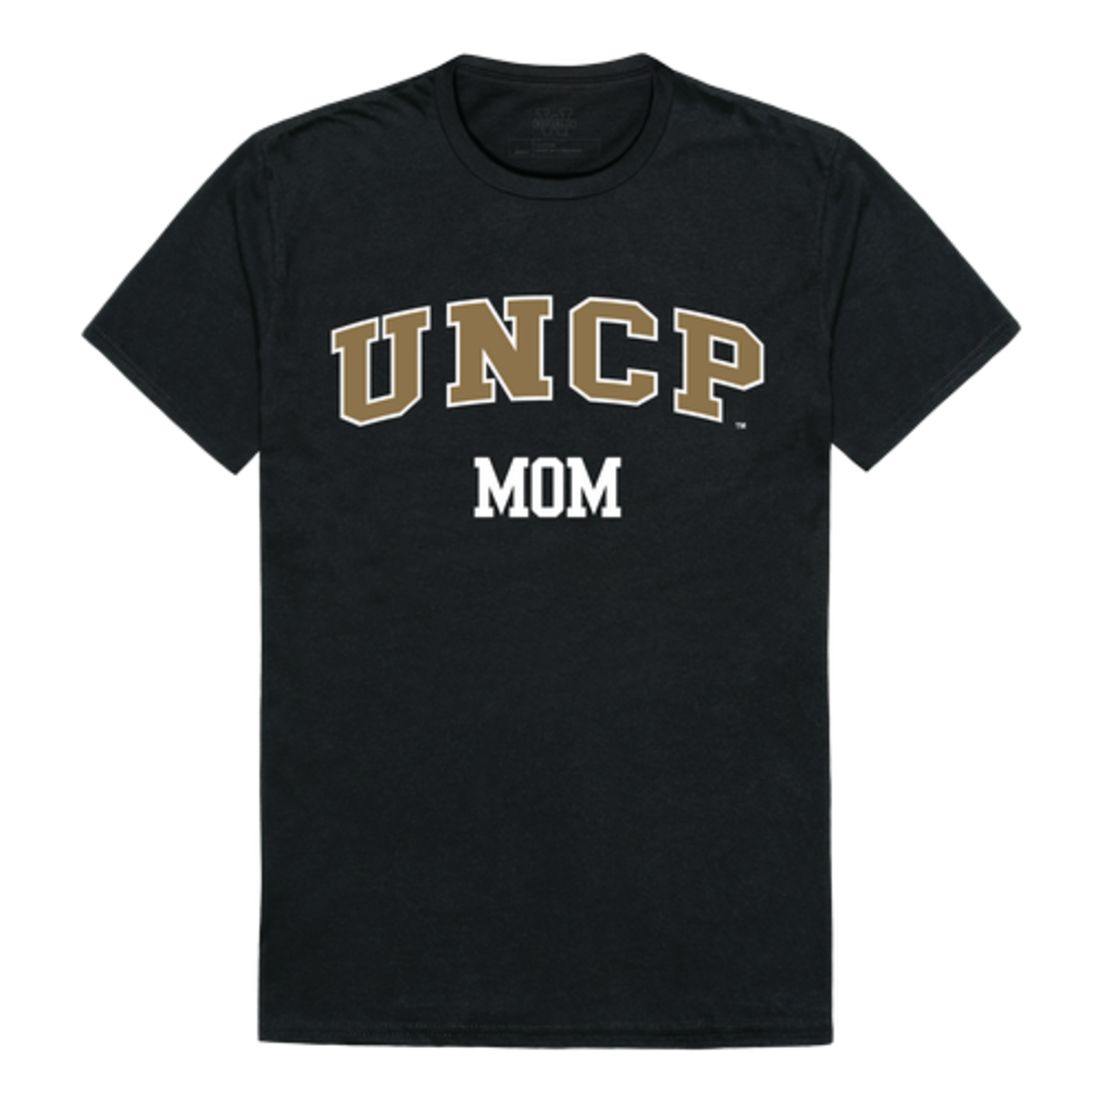 UNCP University of North Carolina at Pembroke Braves College Mom Womens T-Shirt-Campus-Wardrobe